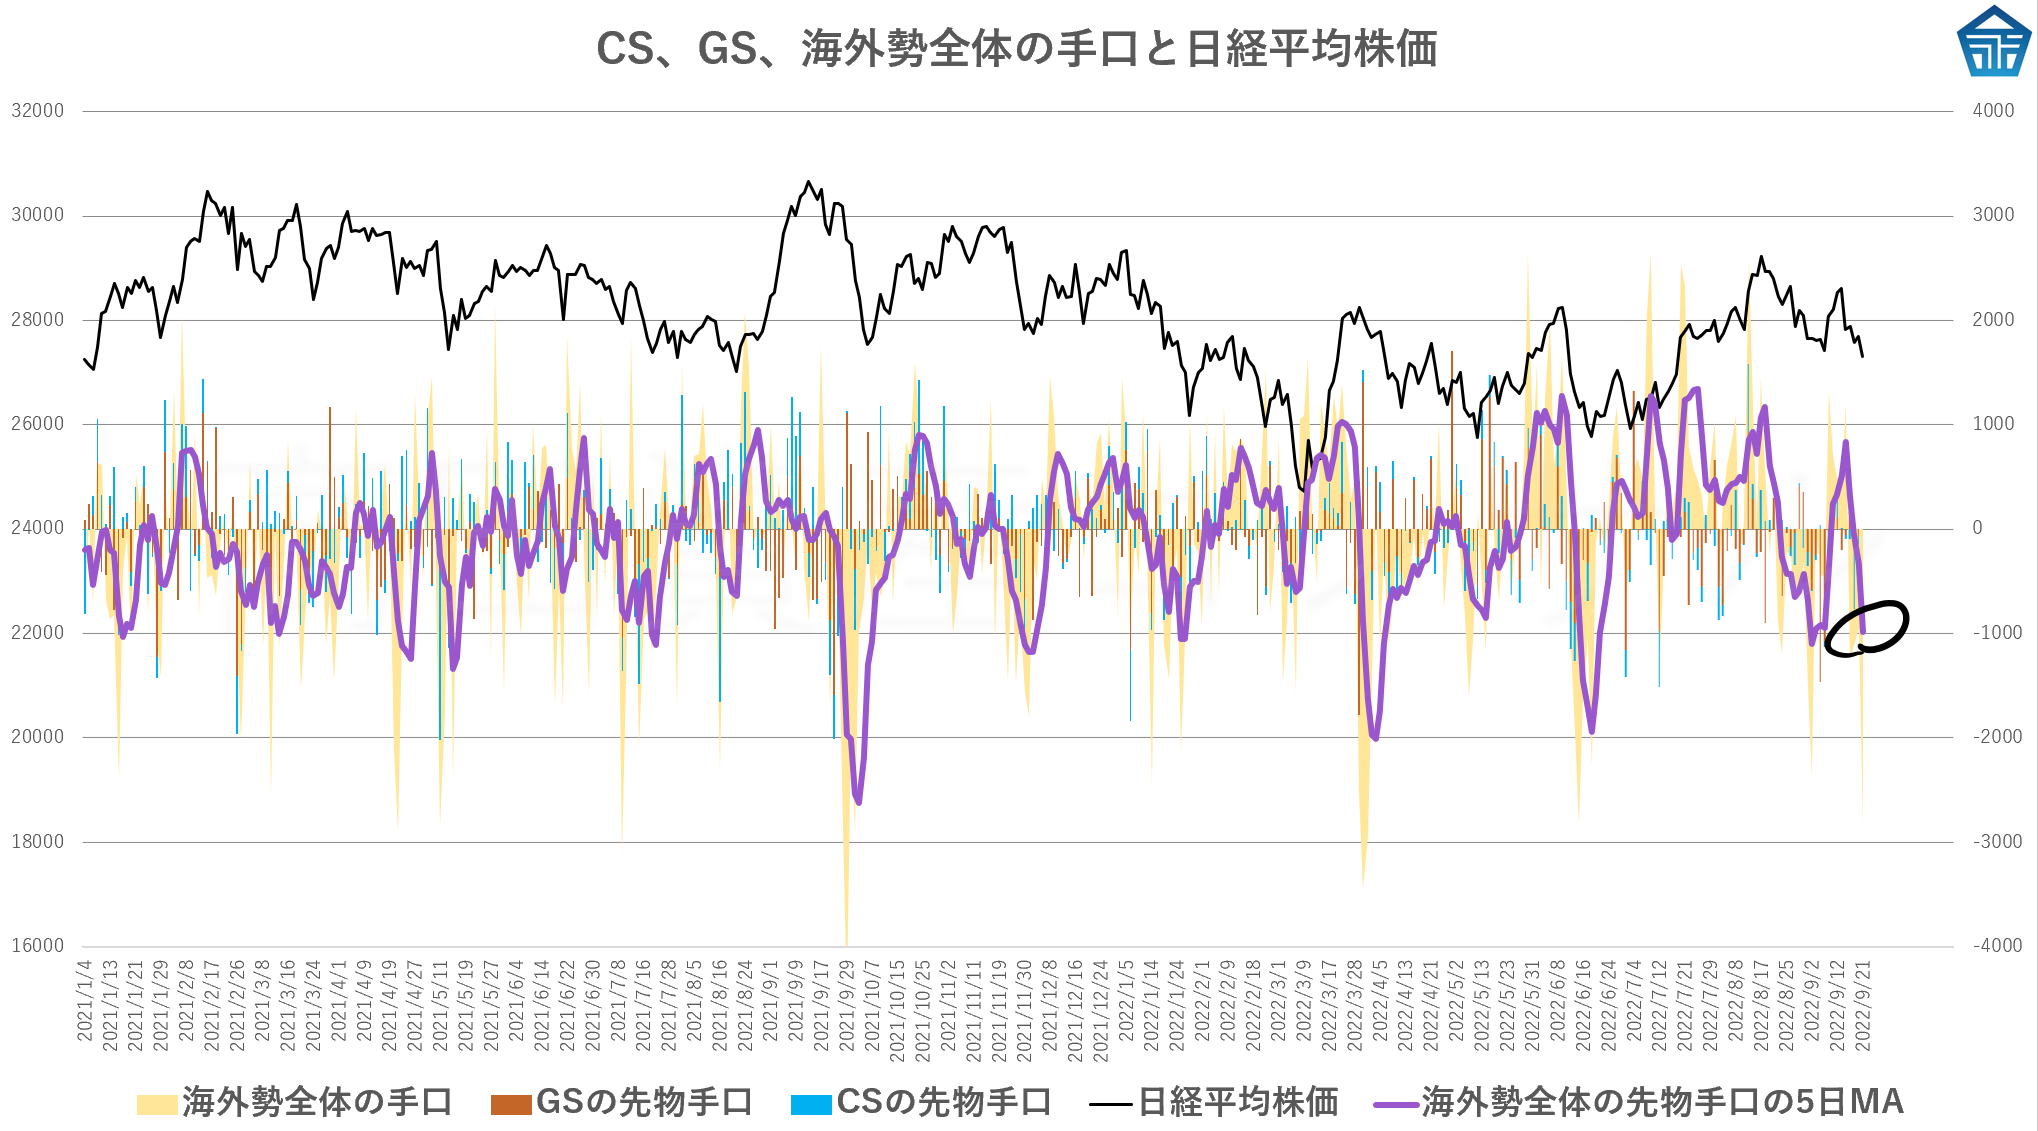 CS、GS、海外勢全体の手口と日経平均株価202209218yhsehj3